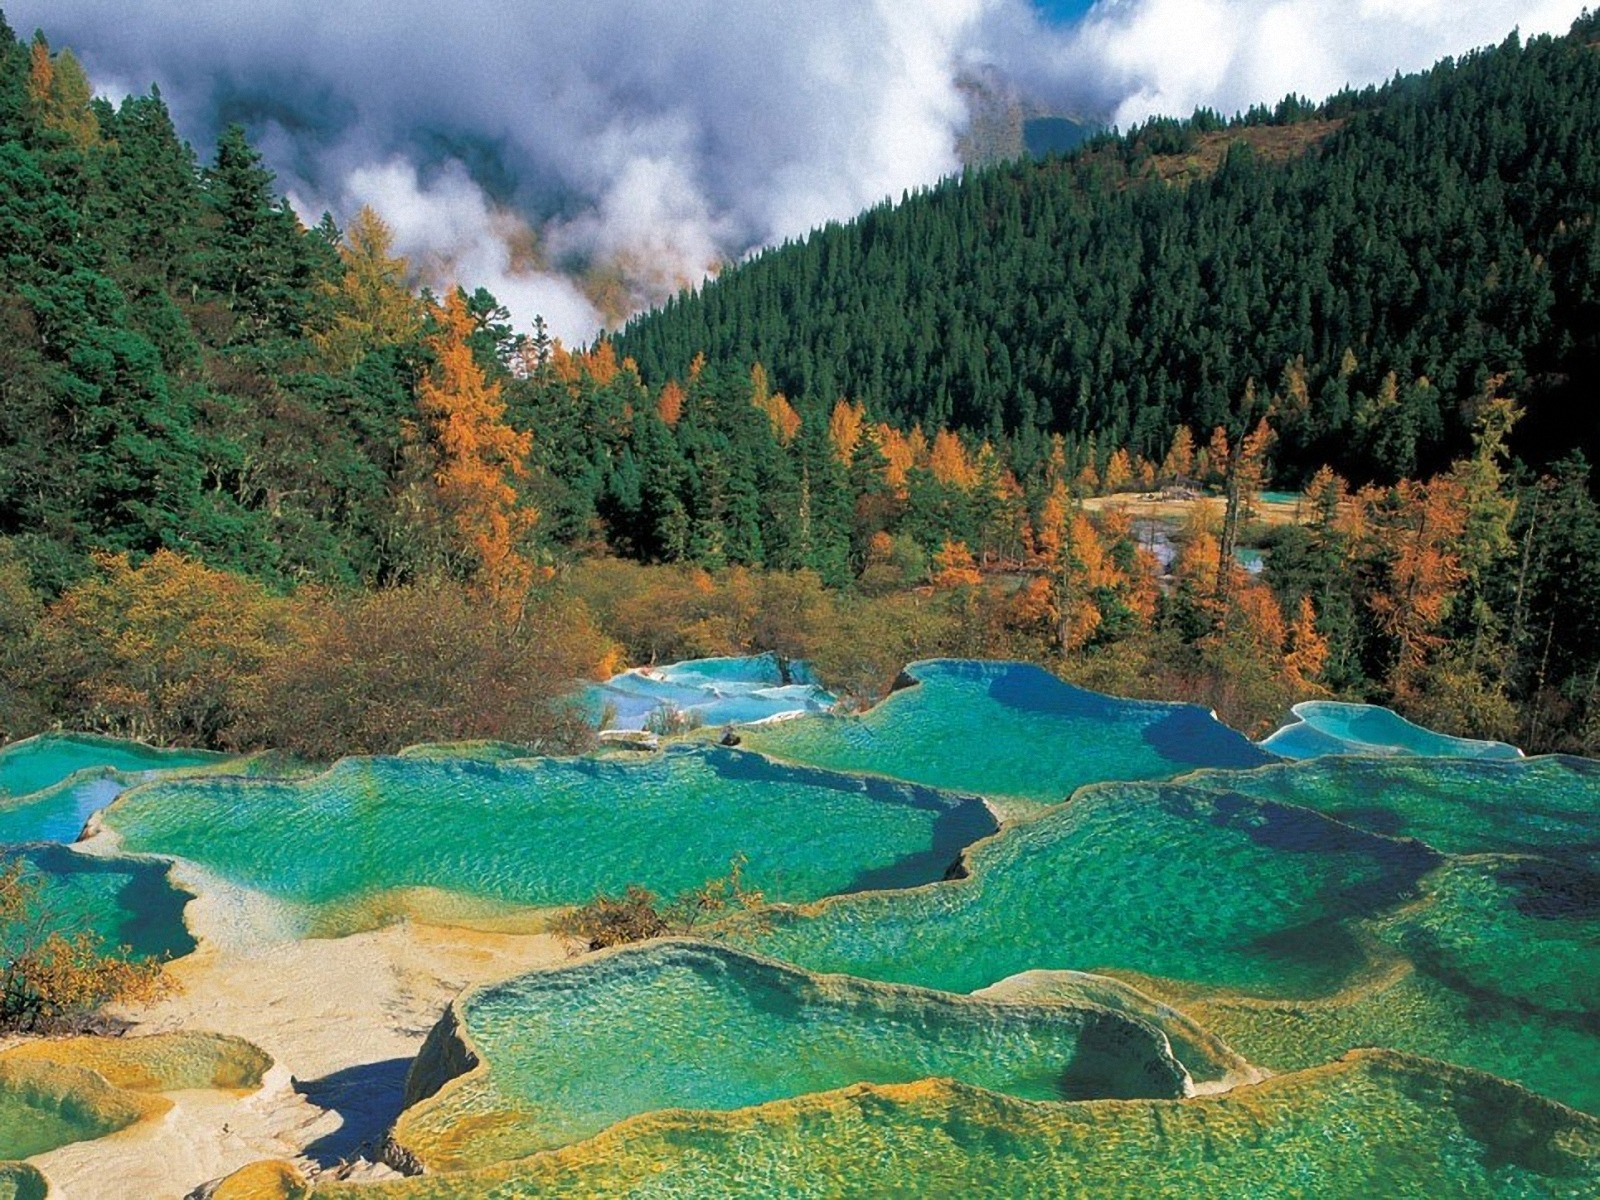 Jiuzhaigou Valley Dreams Destinations